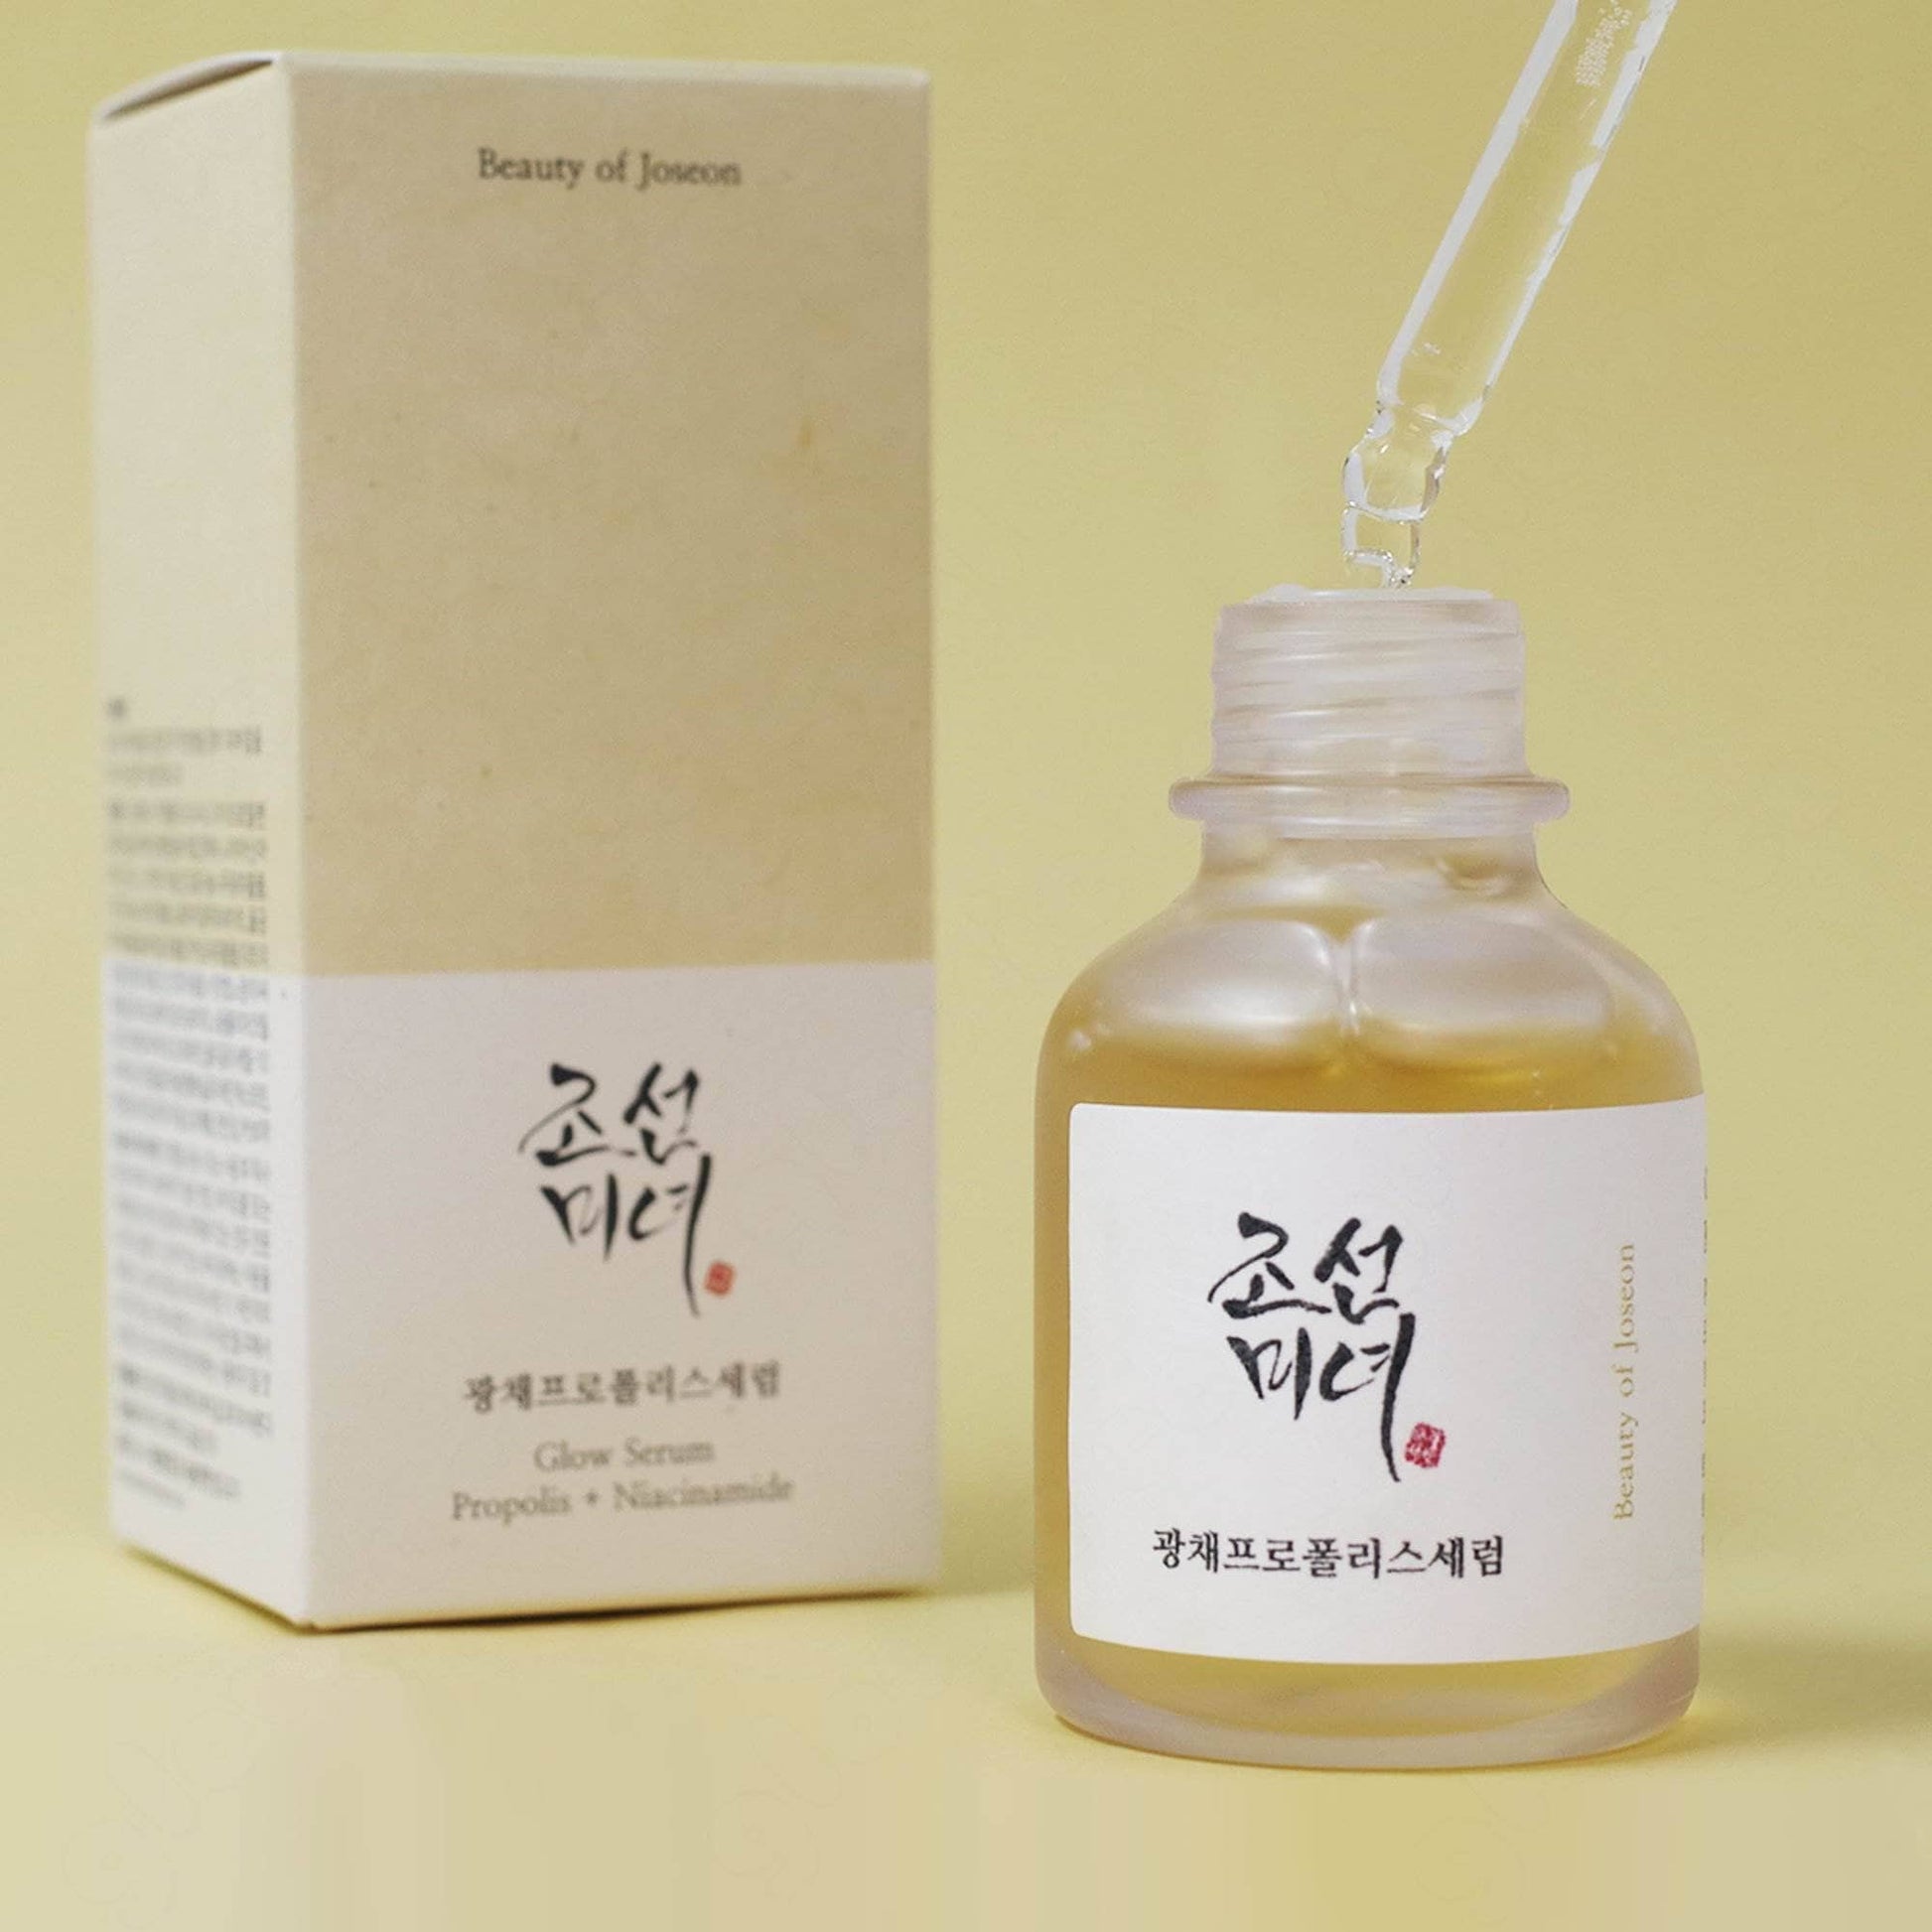 Beauty of Joseon Glow Serum: Propolis + Niacinamide from Beauty of Joseon